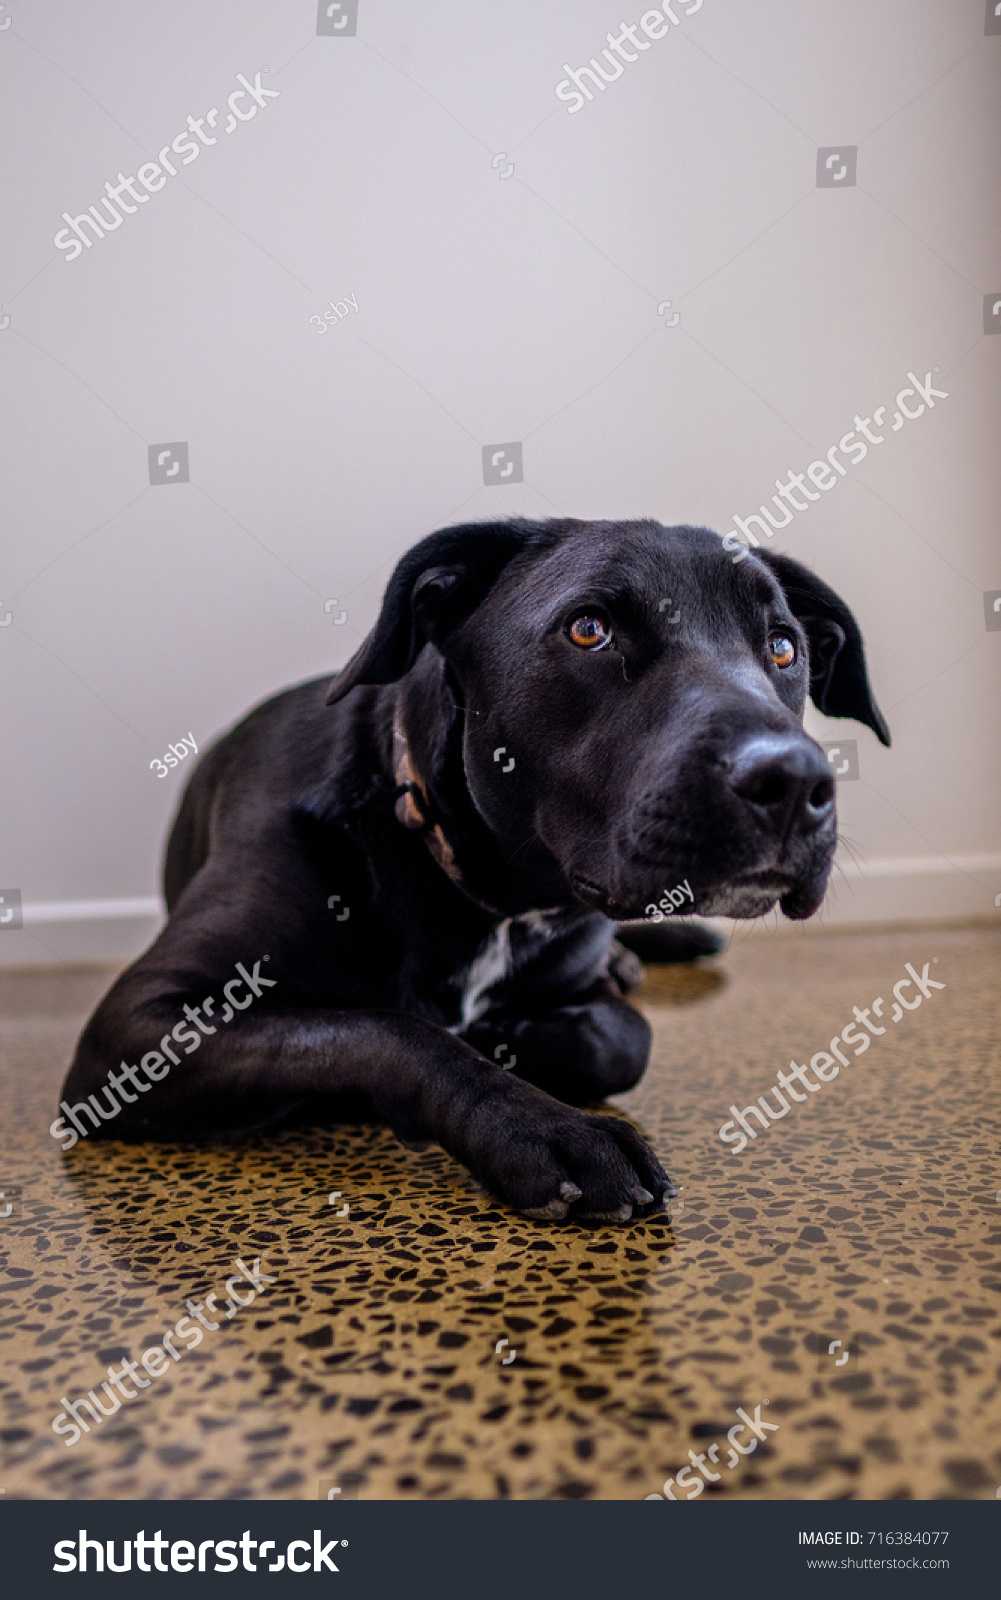 Australian Bull Arab Dog Breed Black Stock Photo Edit Now 716384077